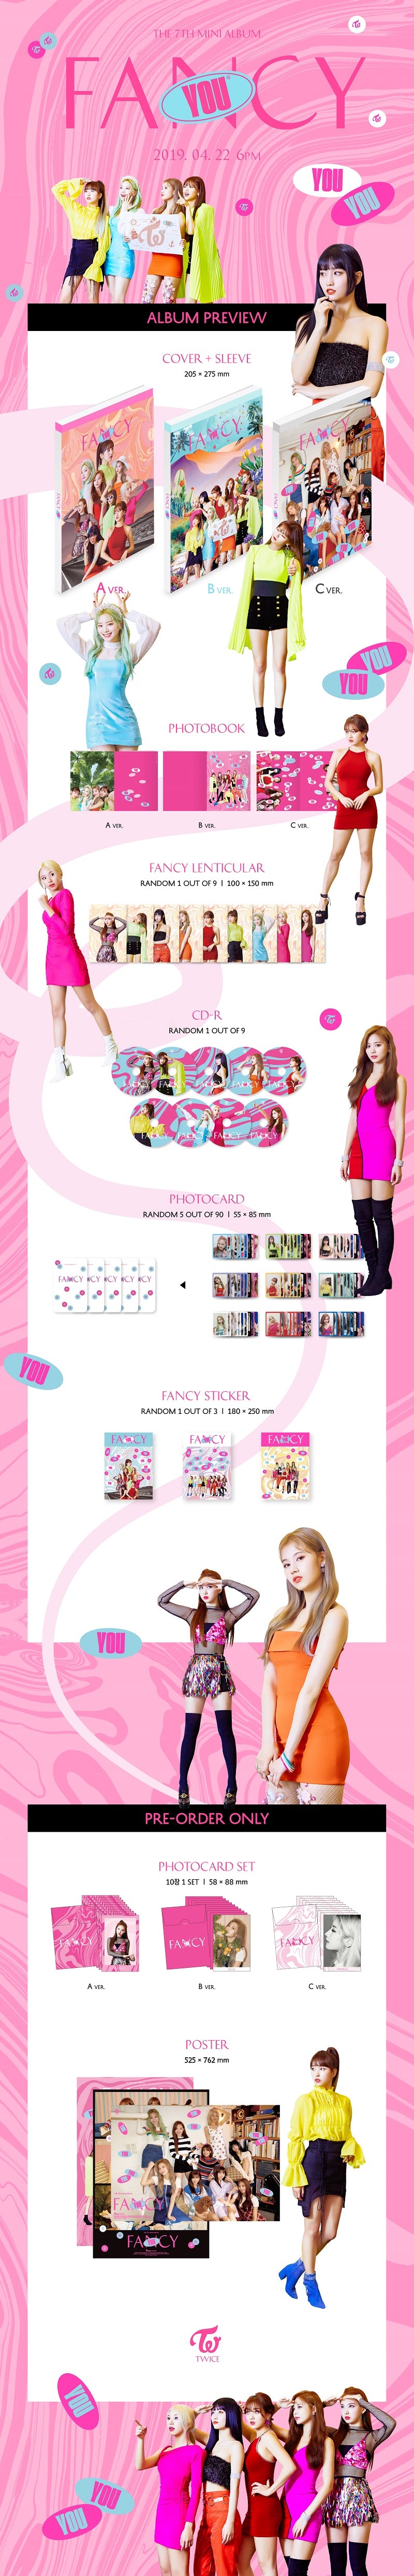 Twice 트와이스 7th Mini Album Fancy You Kpop Music Town